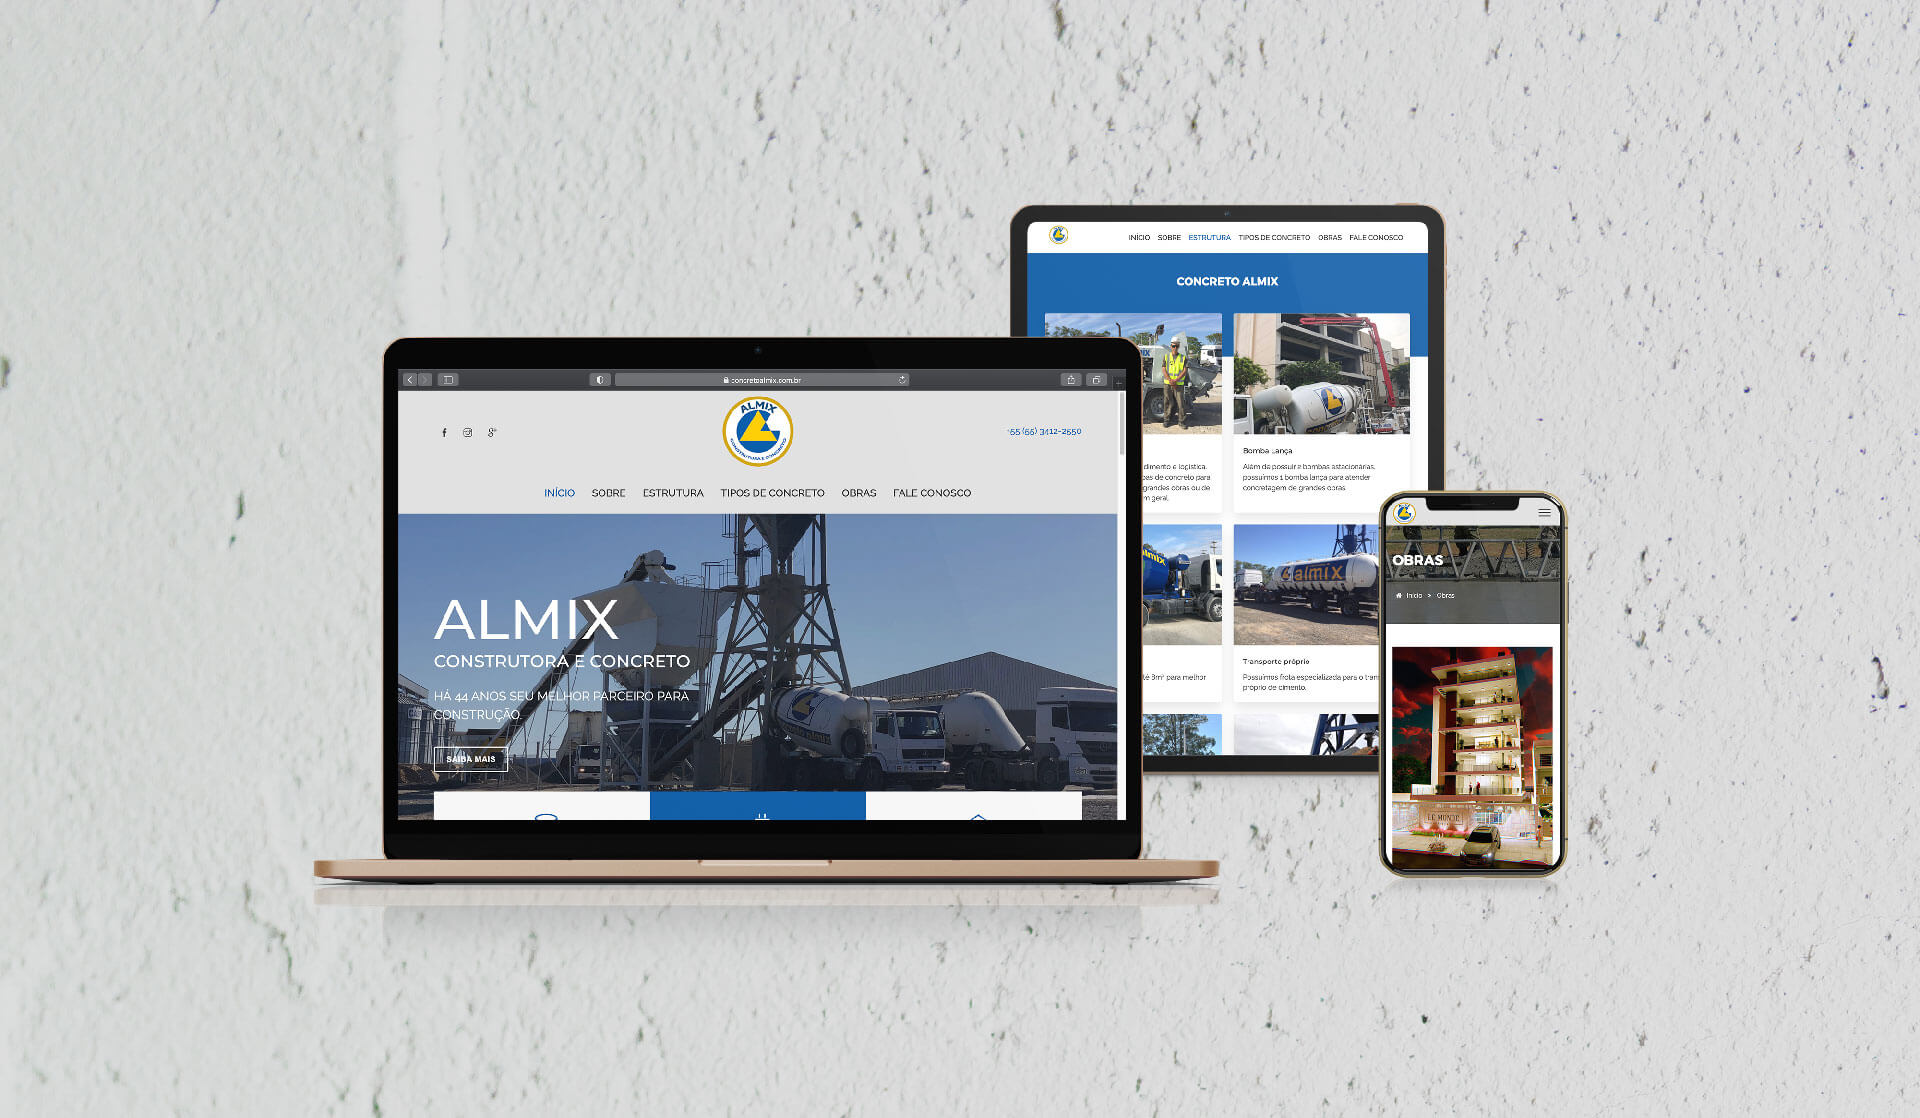 concreto almix uruguaiana site